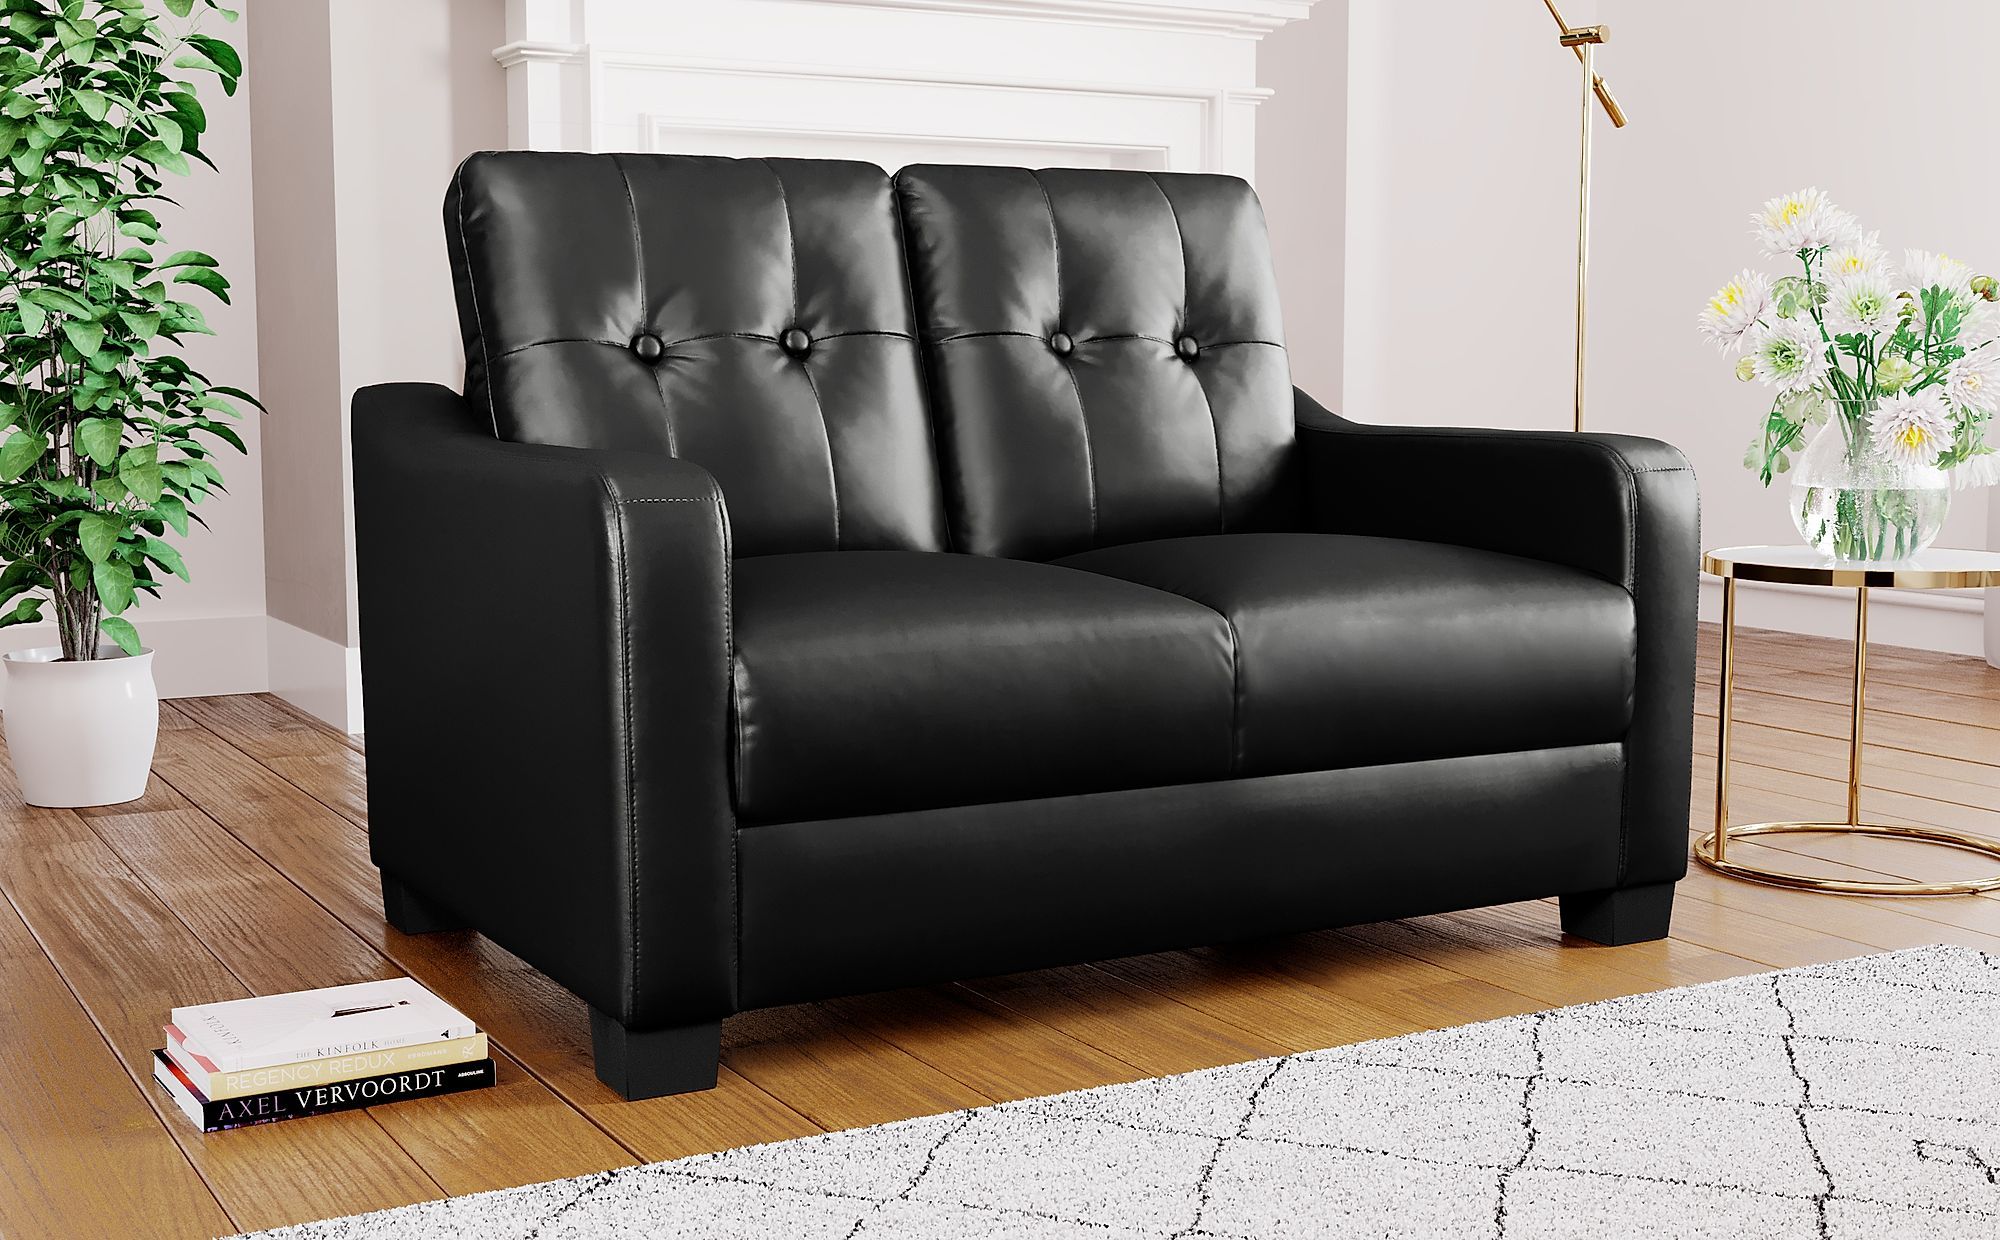 Belmont Black Leather 2 Seater Sofa | Furniture Choice Regarding Sofas In Black (View 18 of 20)